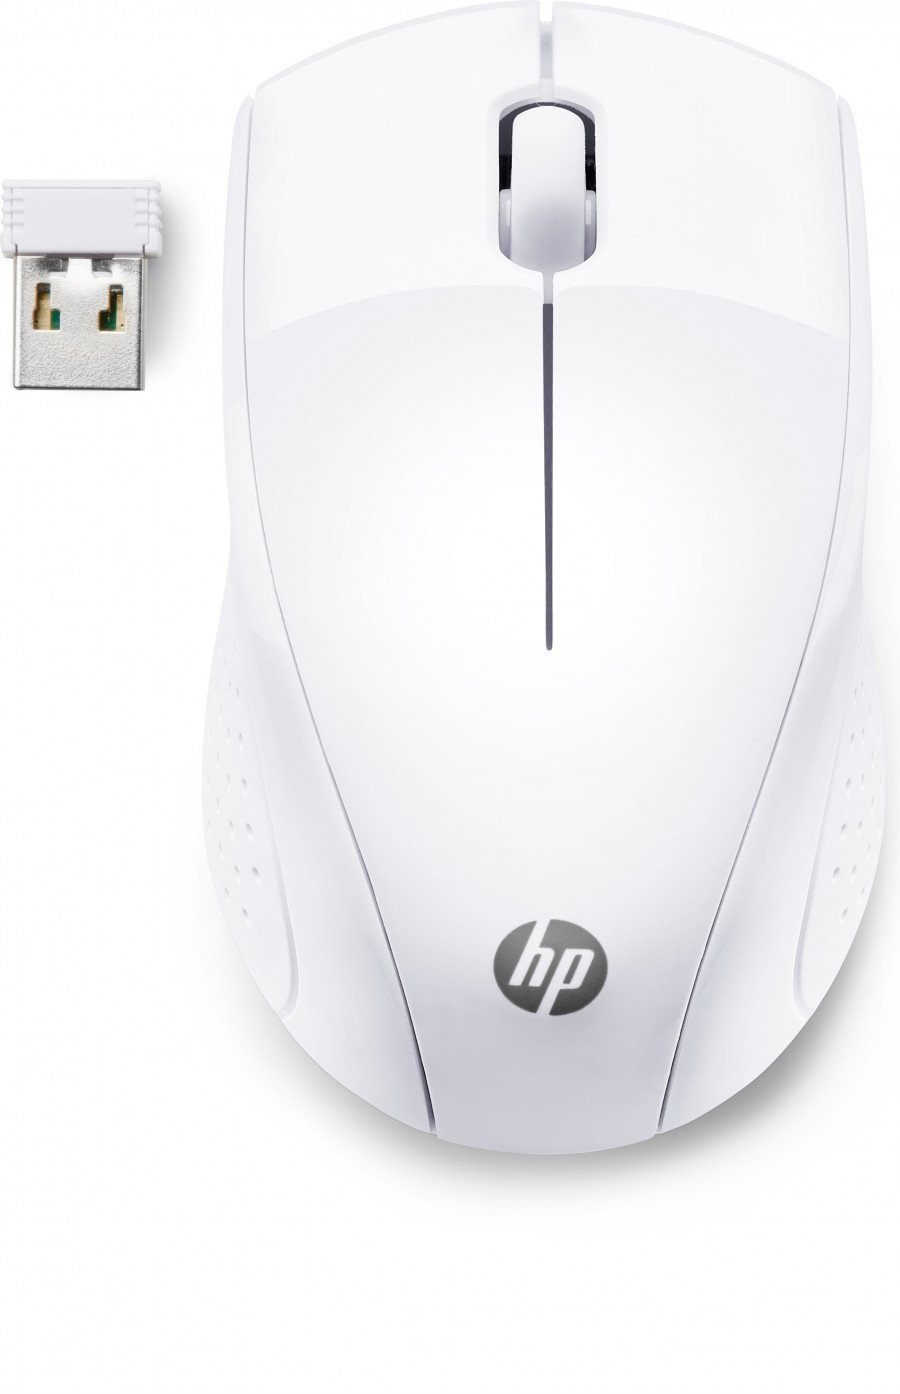 Image of Hp hewlett packard hp wireless mouse 220 s white accessori consumer HP Wireless Mouse 220 Componenti Informatica